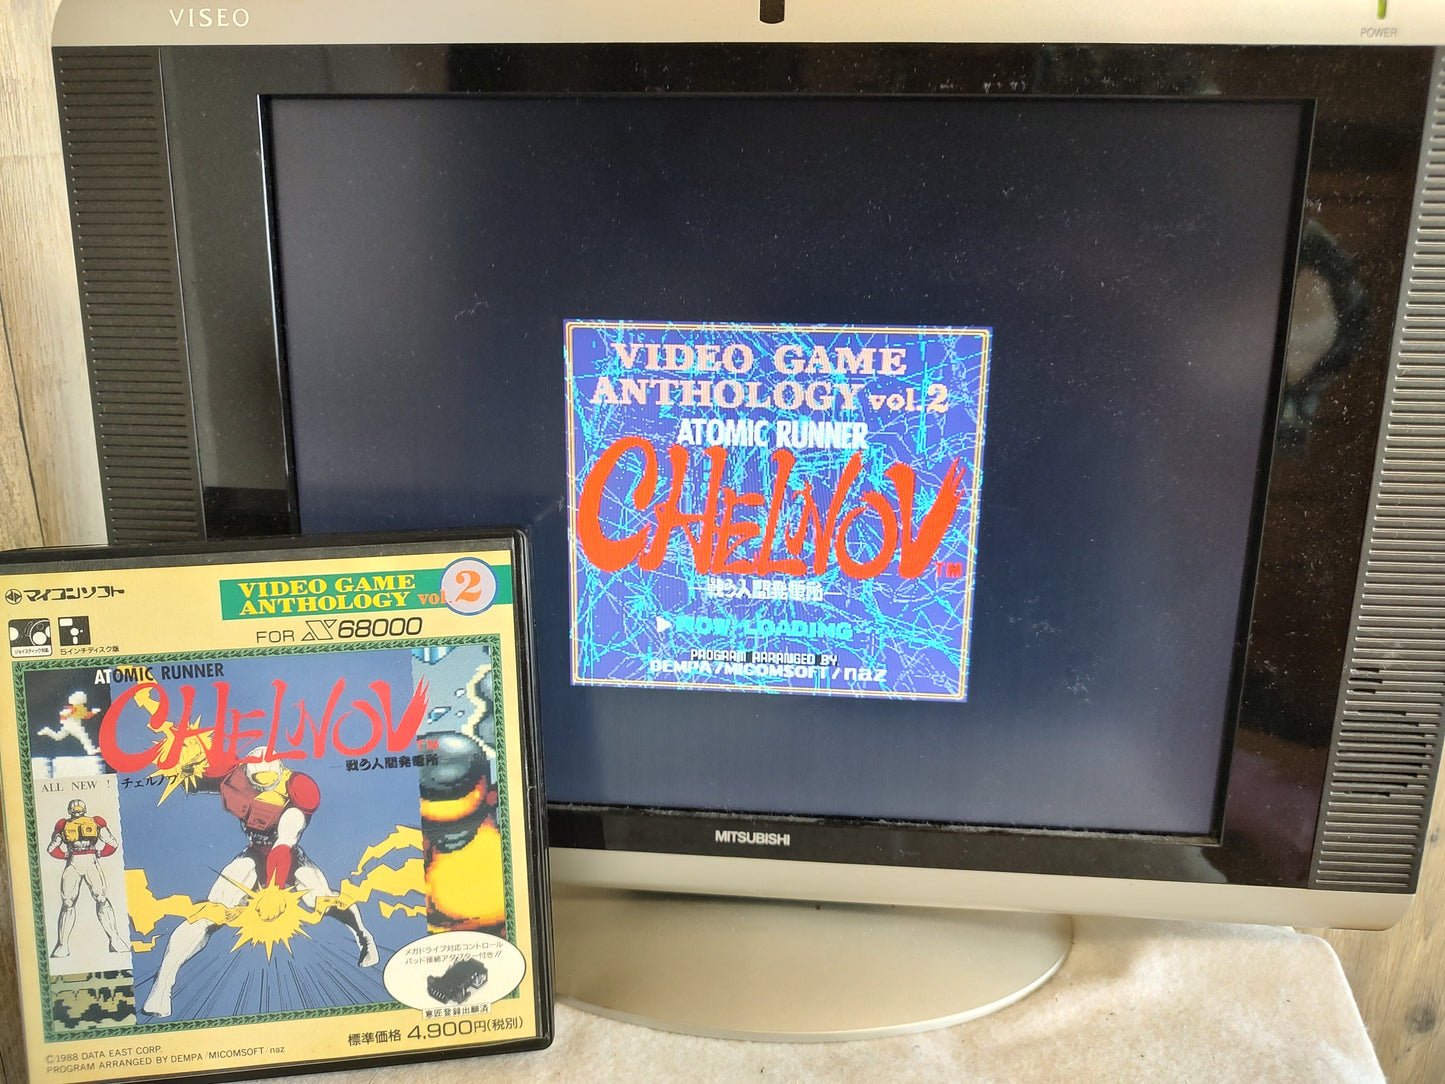 CHELNOV The Atomic Runner SHARP X68000 Game w/Manual, and Box set, Working-f0505